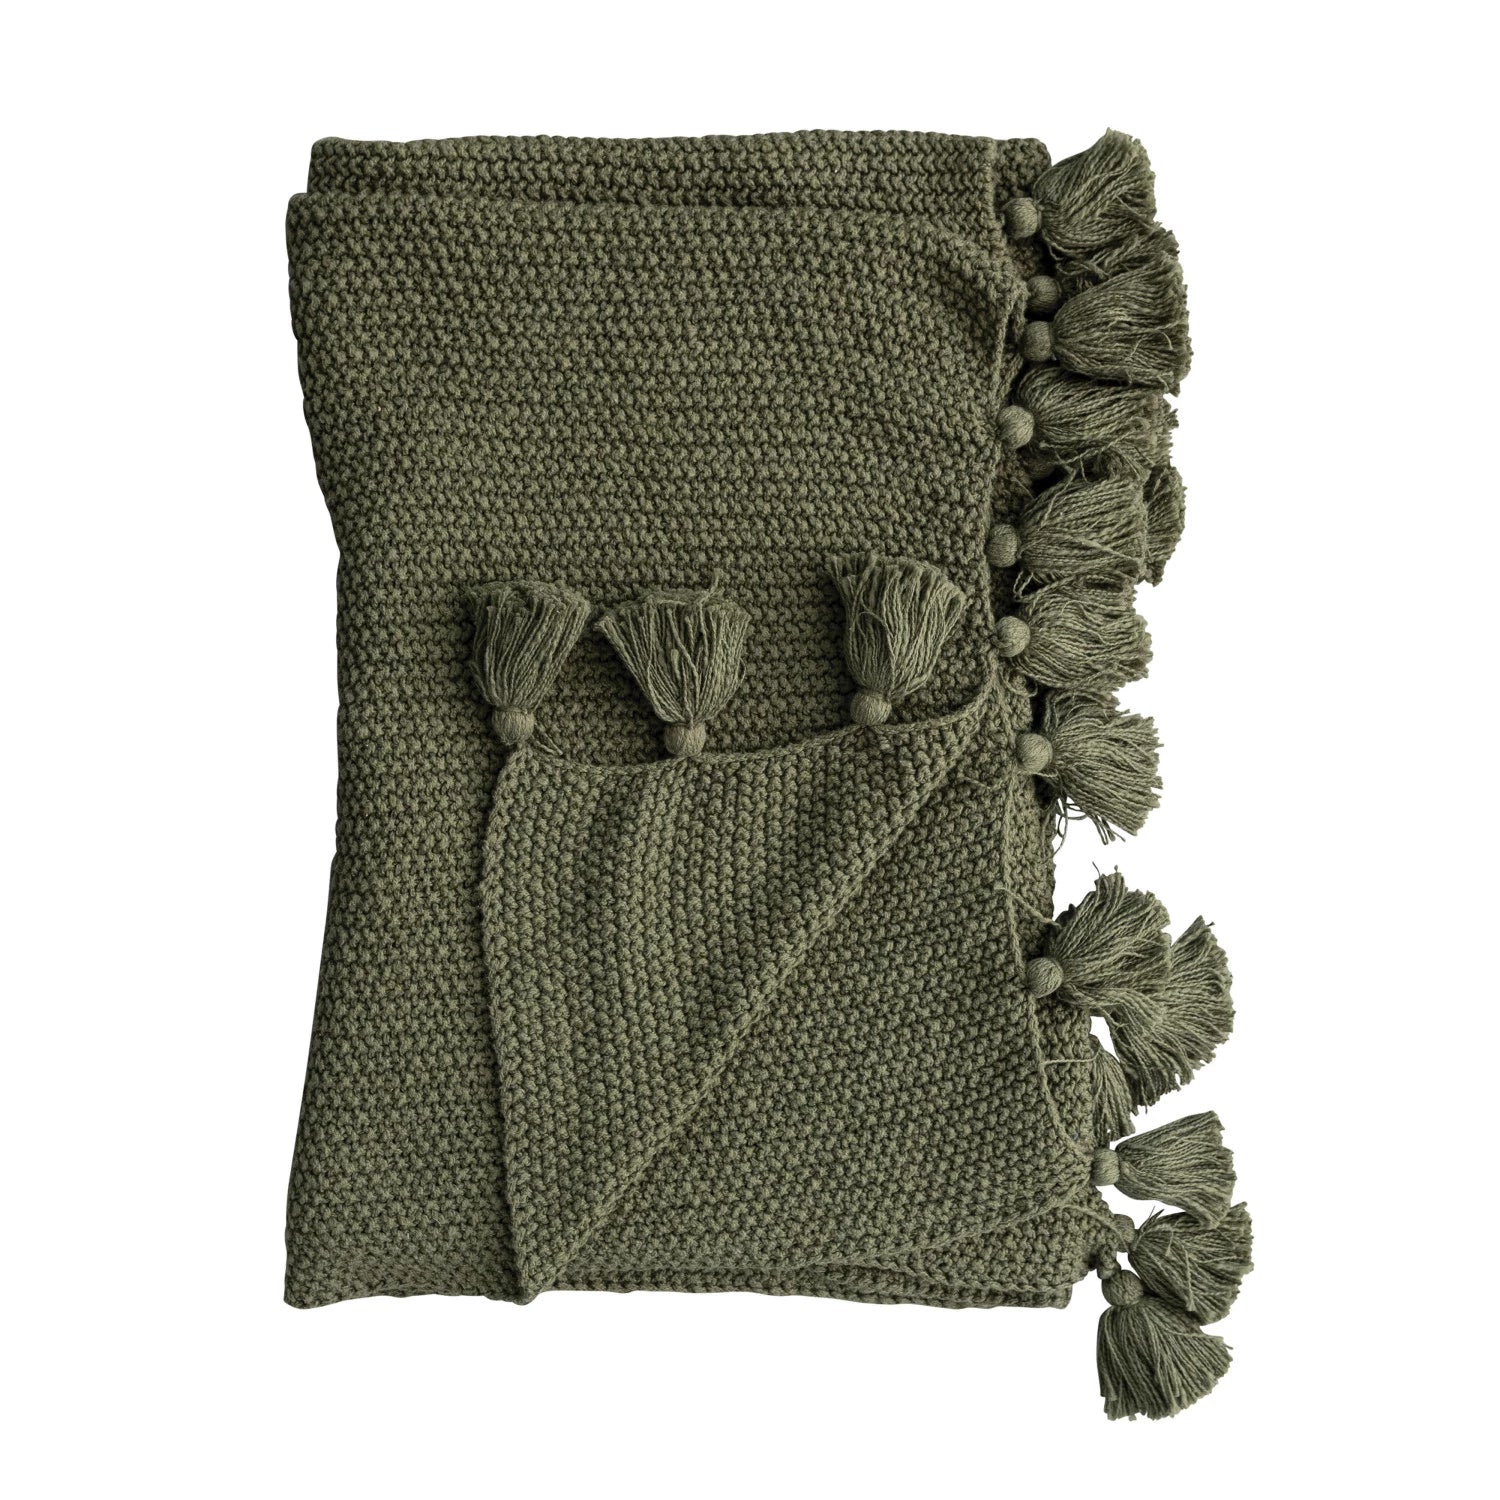 Cotton Knit Throw w/Tassels (Olive)